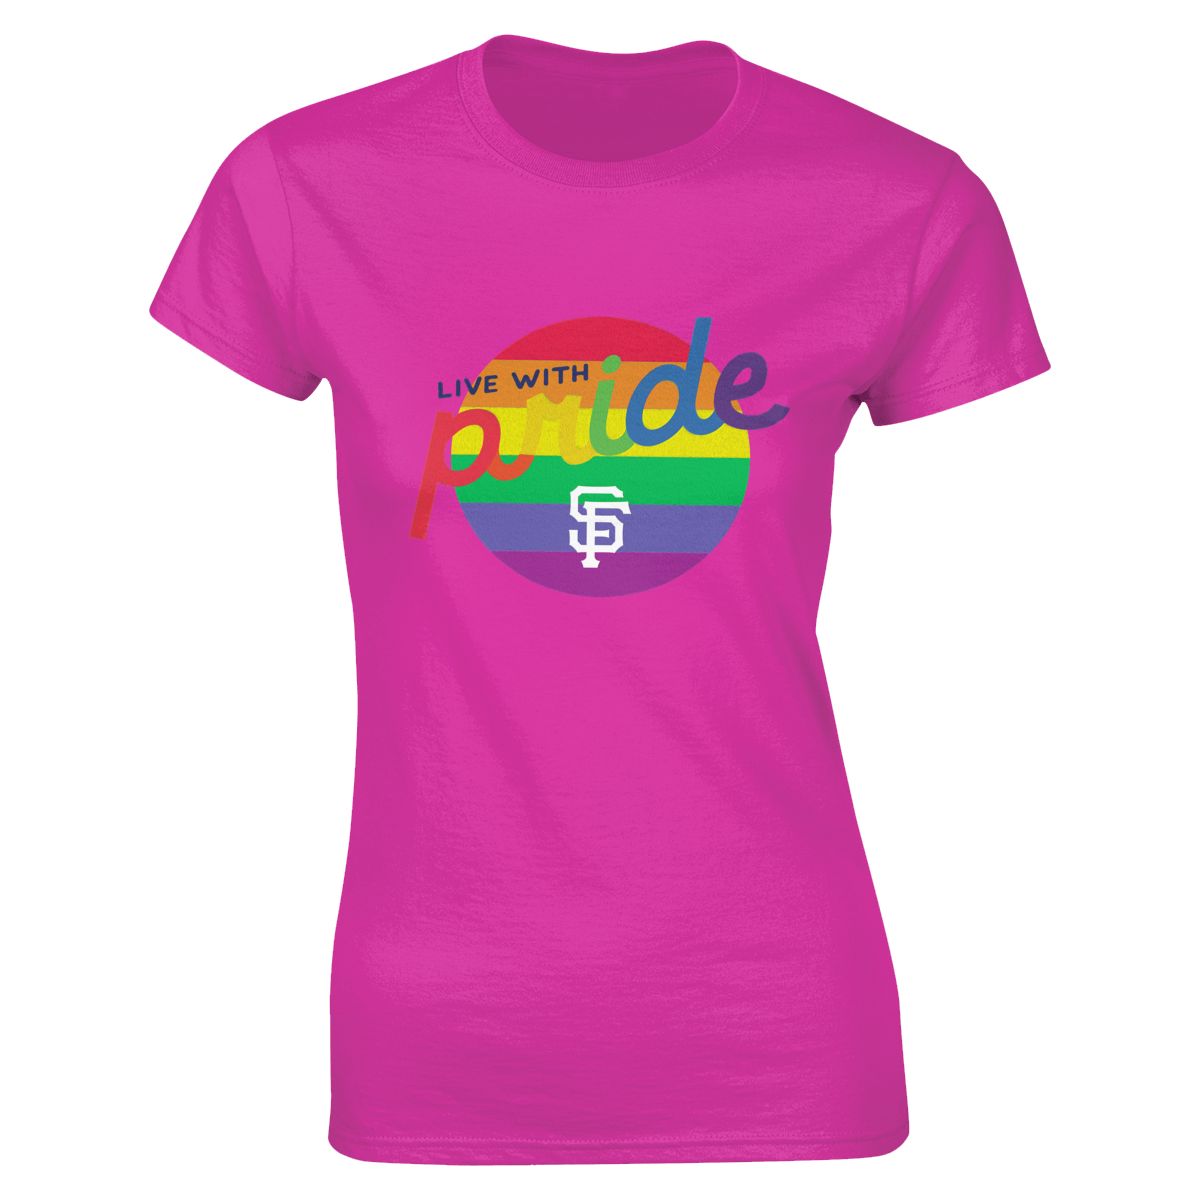 San Francisco Giants Round LGBT Lettering Women's Crewneck T-Shirt